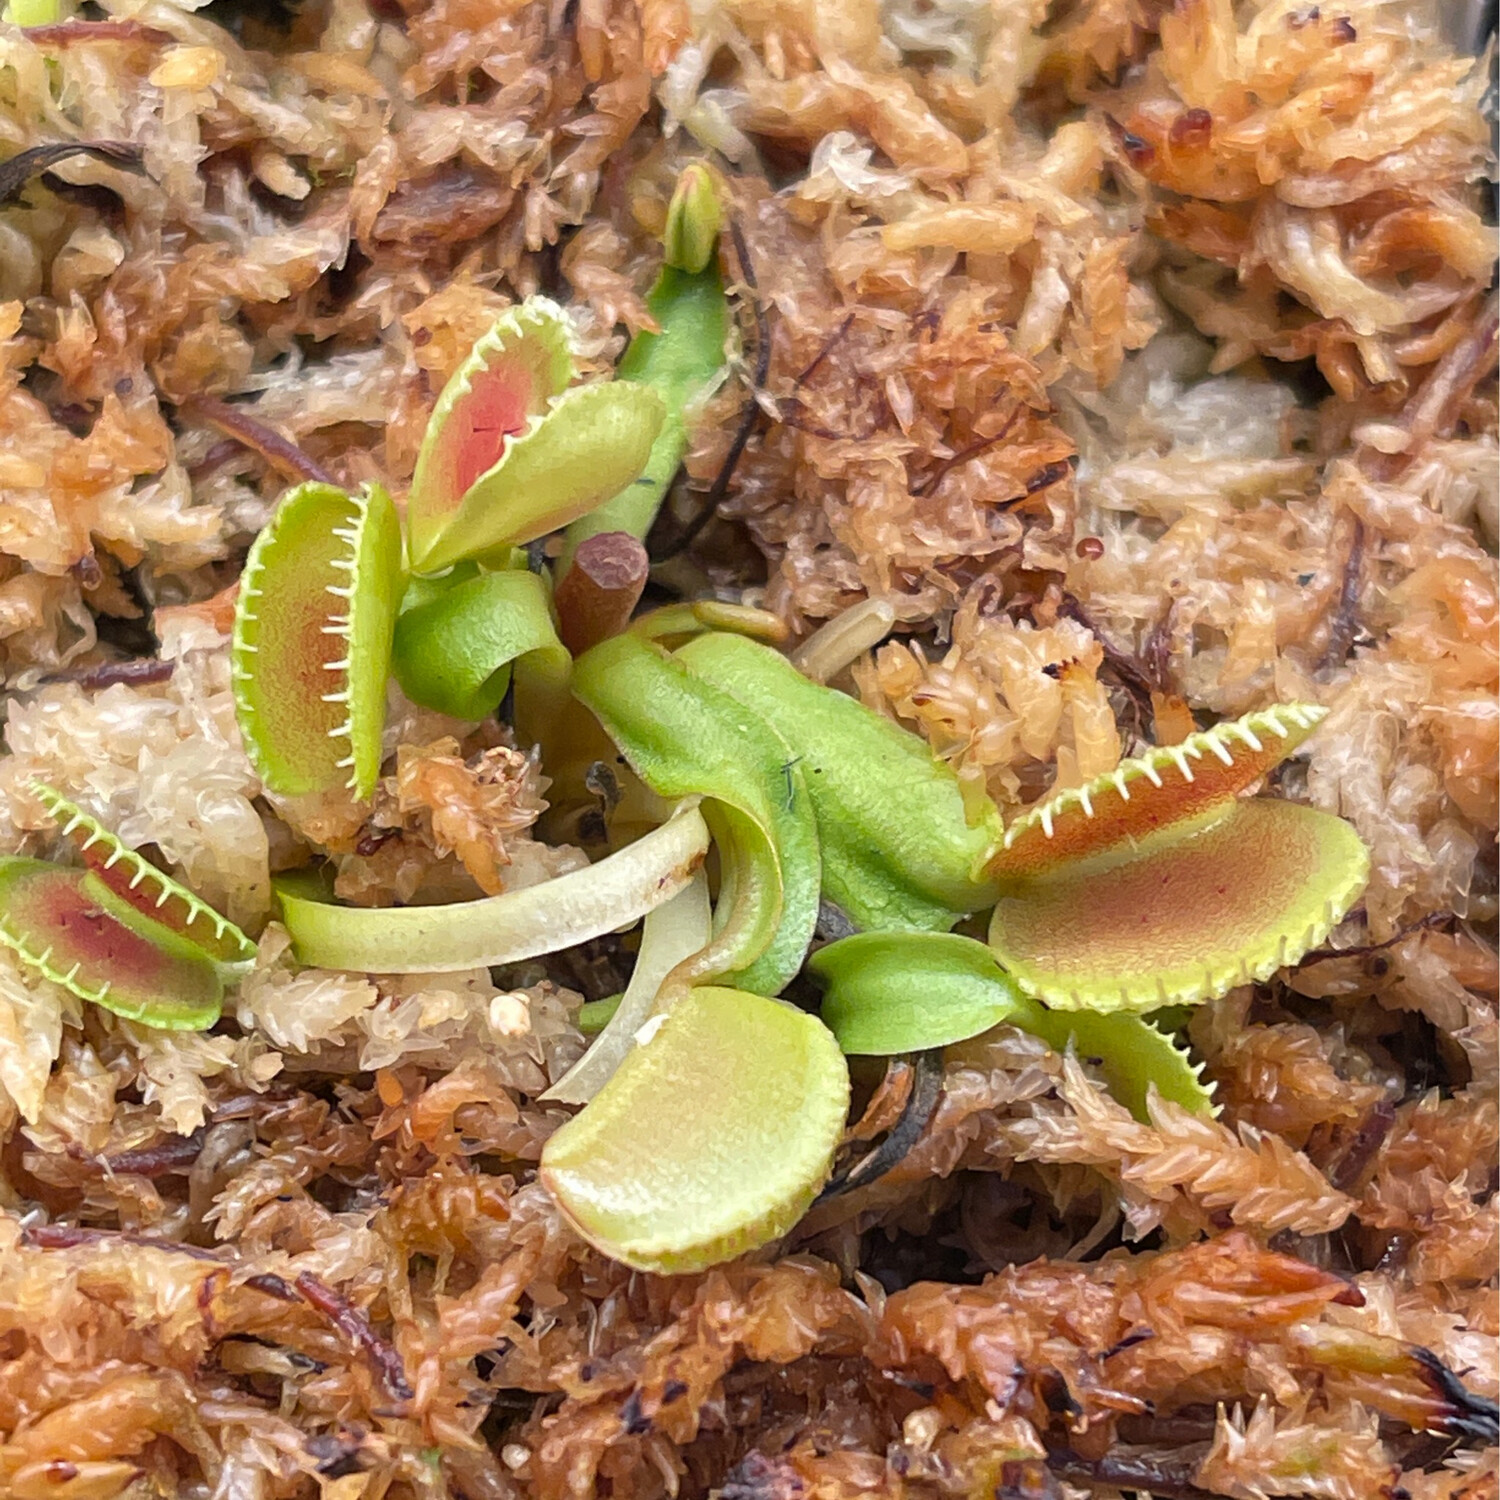 Dionaea muscipula  “Green Wizard” Venus Flytrap (small)